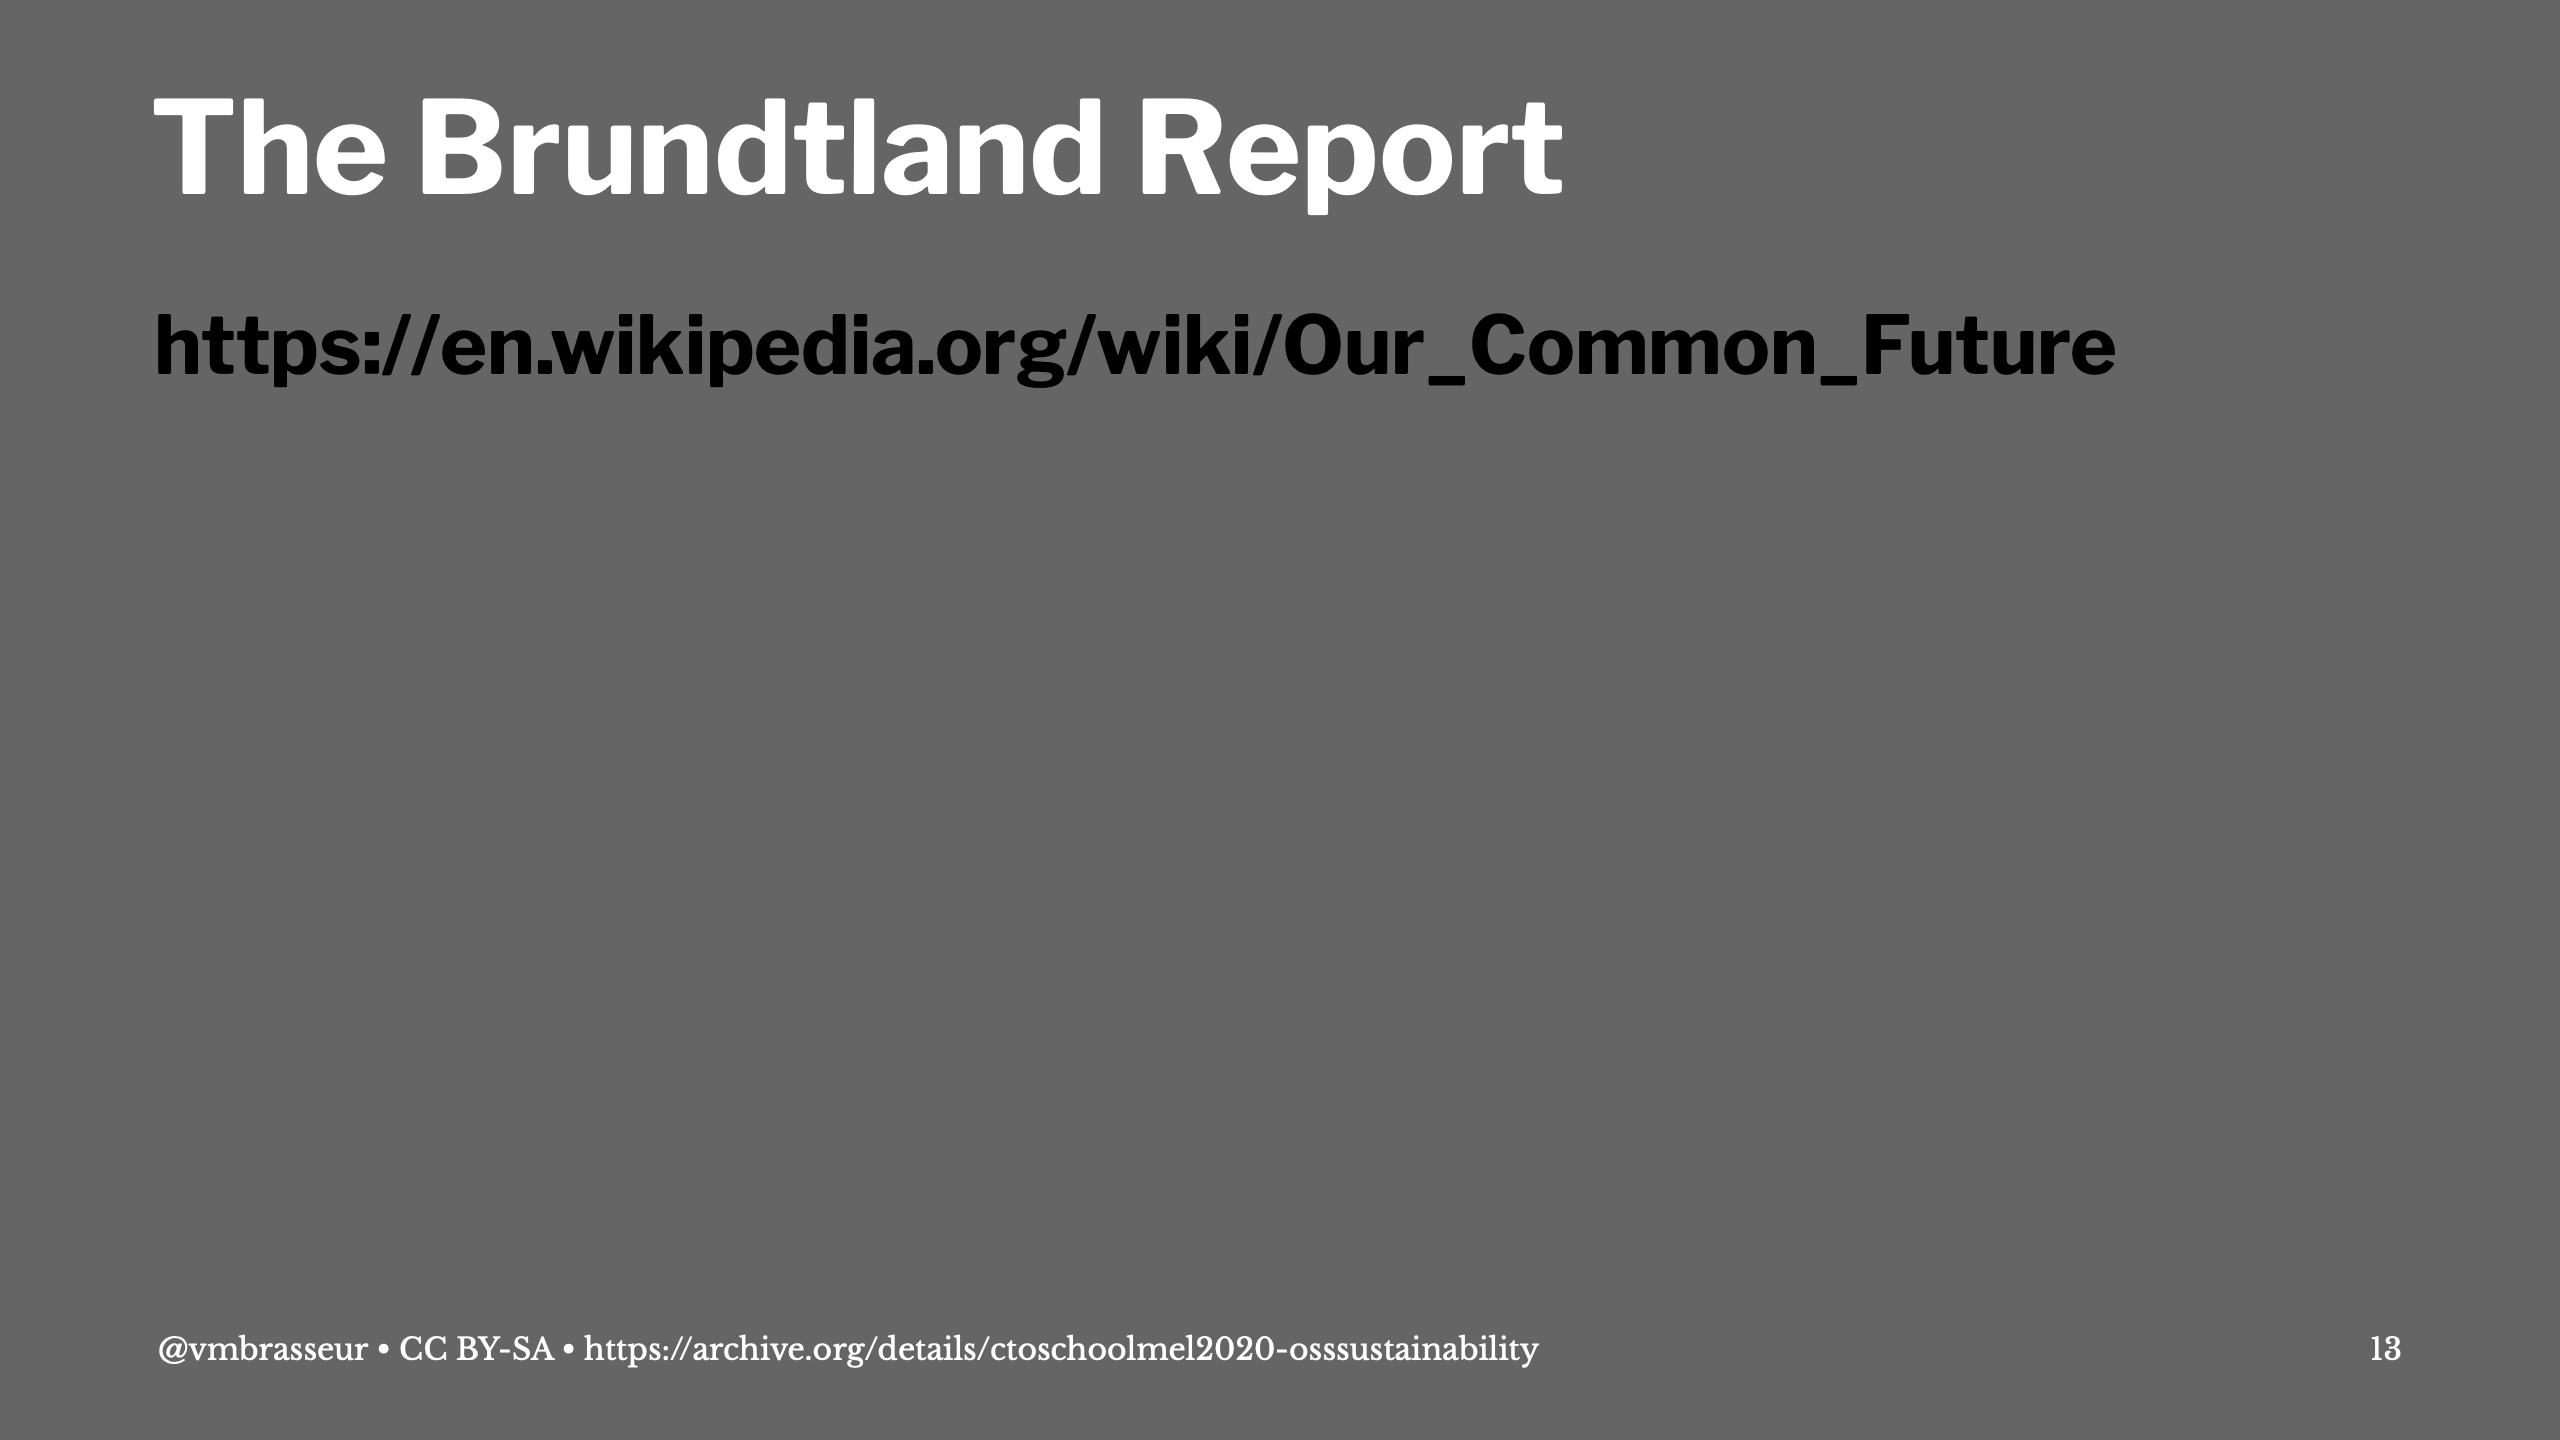 Link to The Brundtland Report